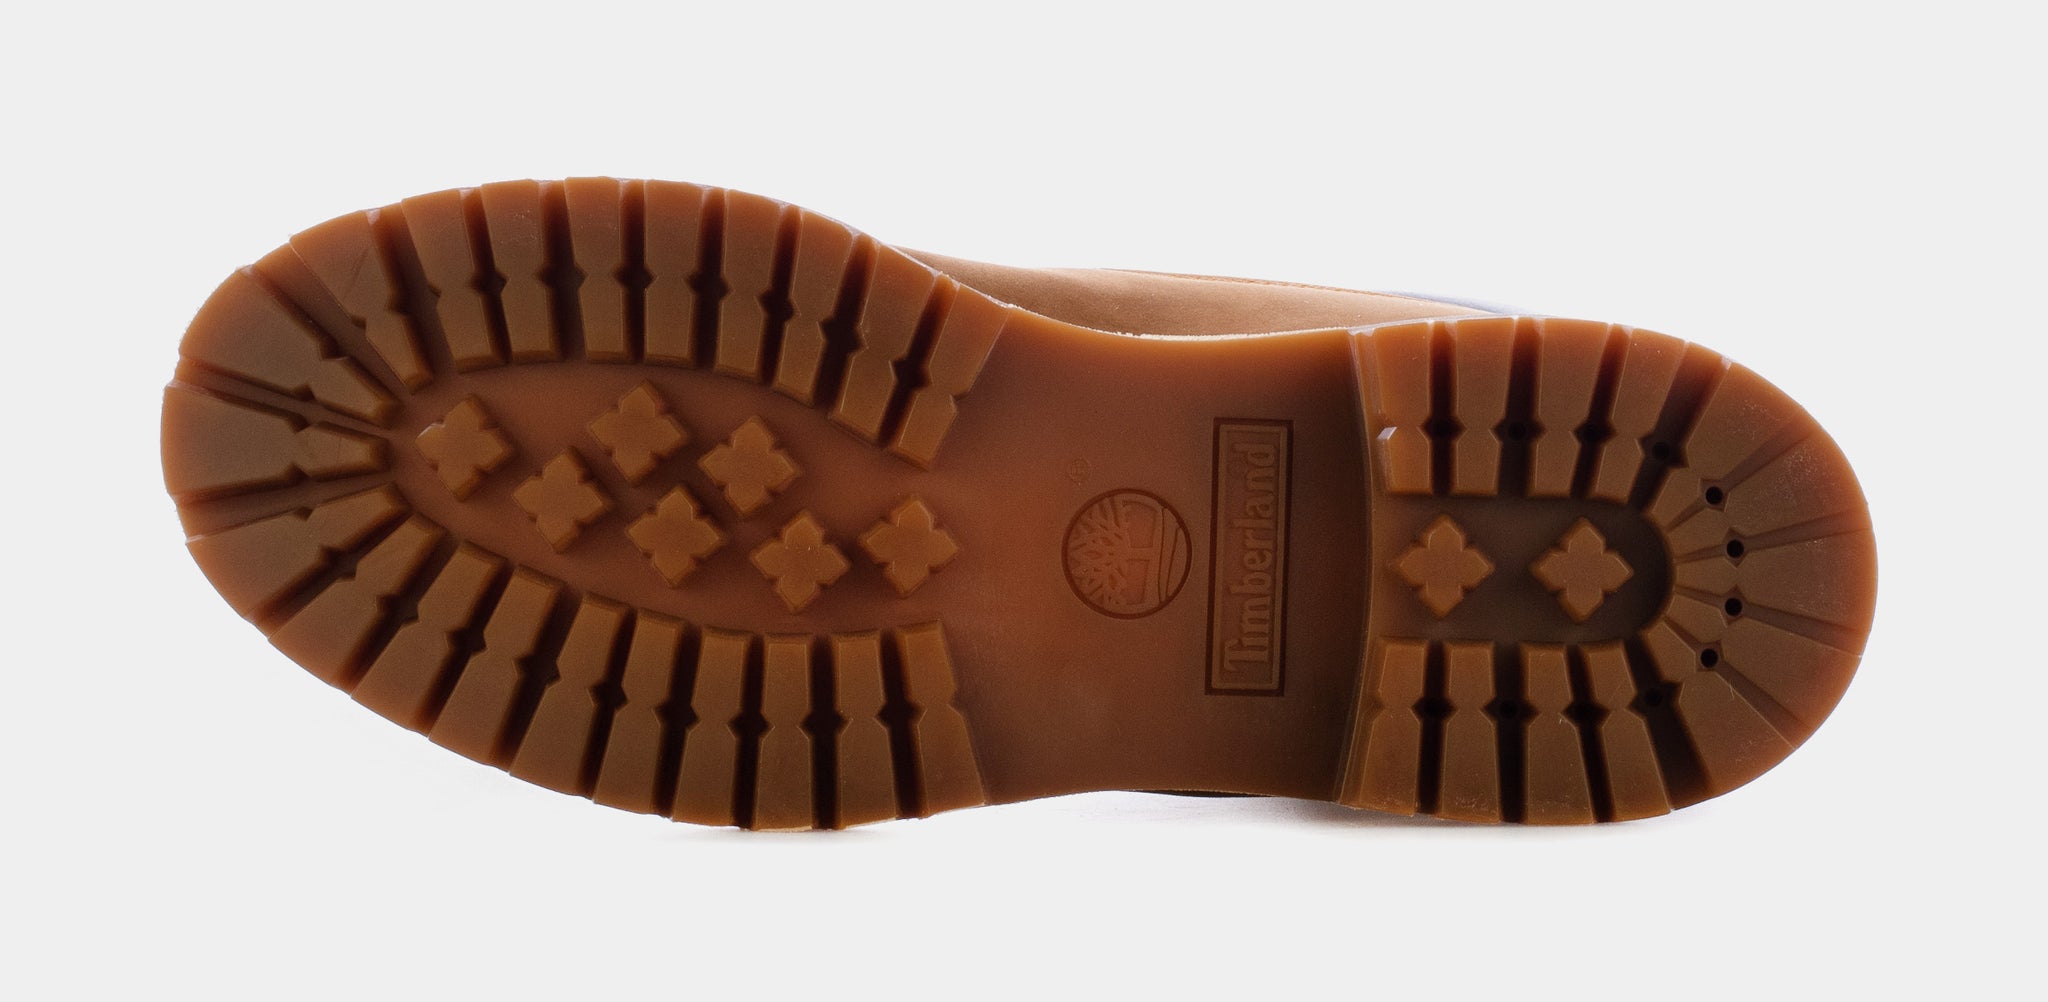 6-Inch Premium Waterproof Mens Boots (Rust Nubuck/Brown)